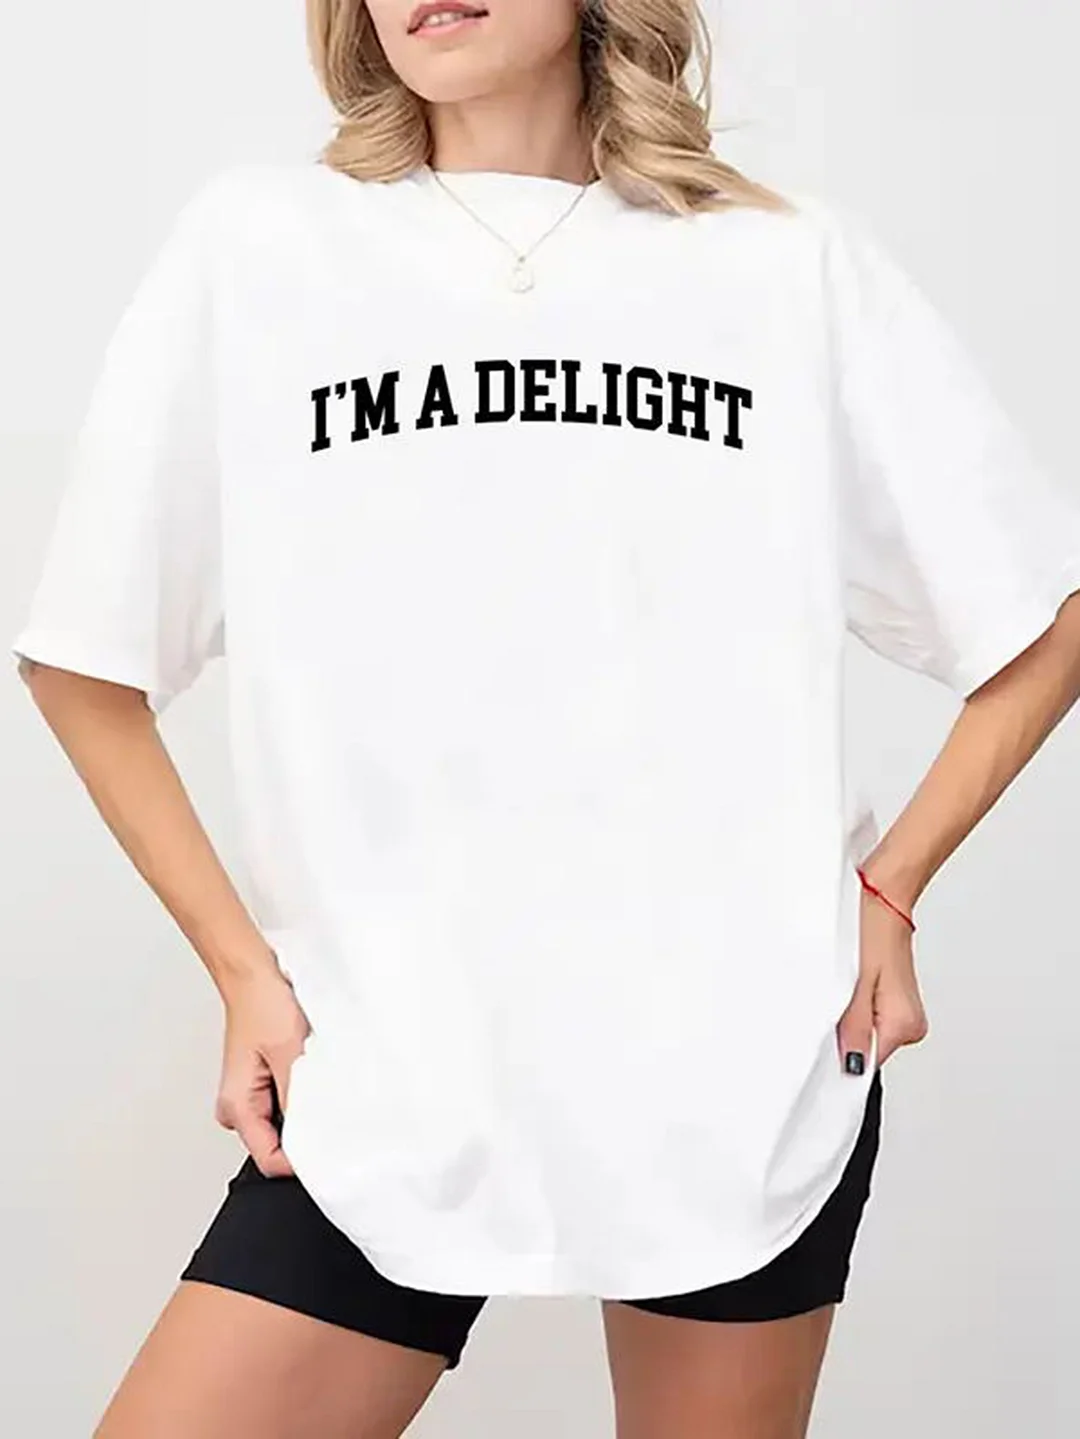 I'm A Delight Shirt, I'm Delightful T-Shirt, Motivational T-Shirt / DarkAcademias /Darkacademias